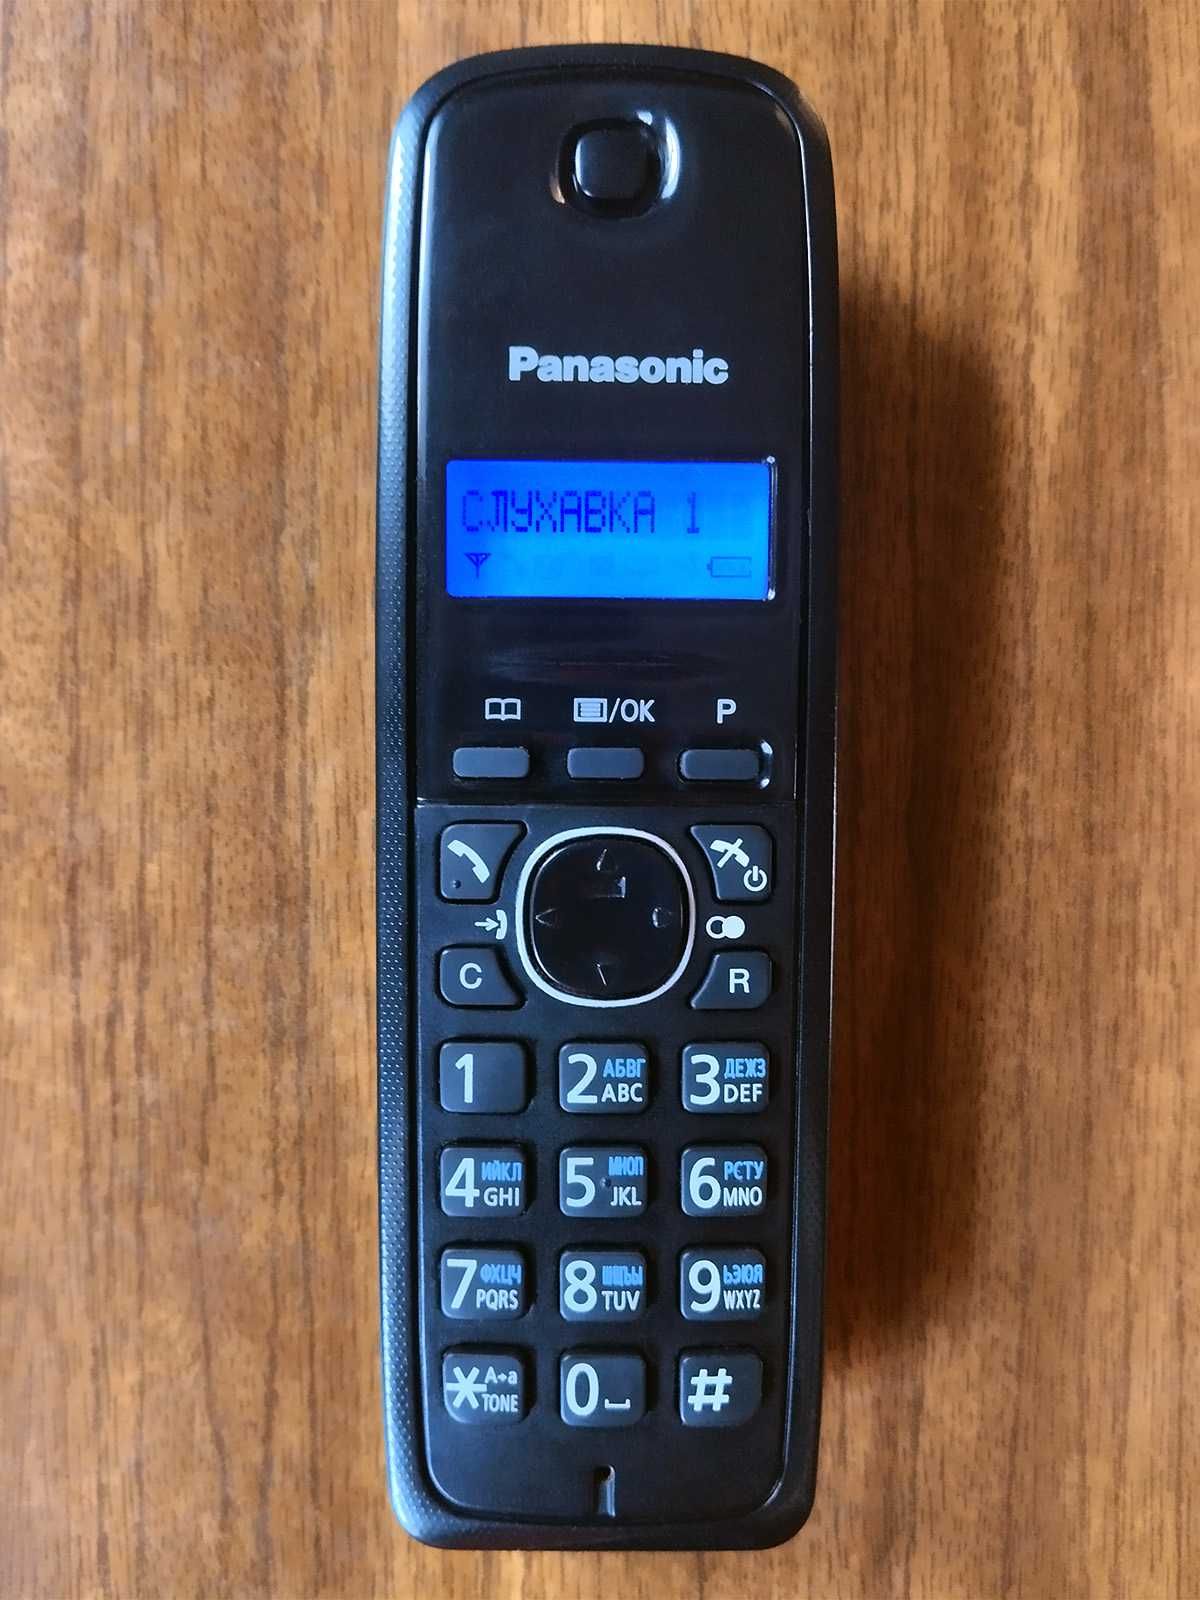 Радіотелефон Panasonic KX-TG1611UA